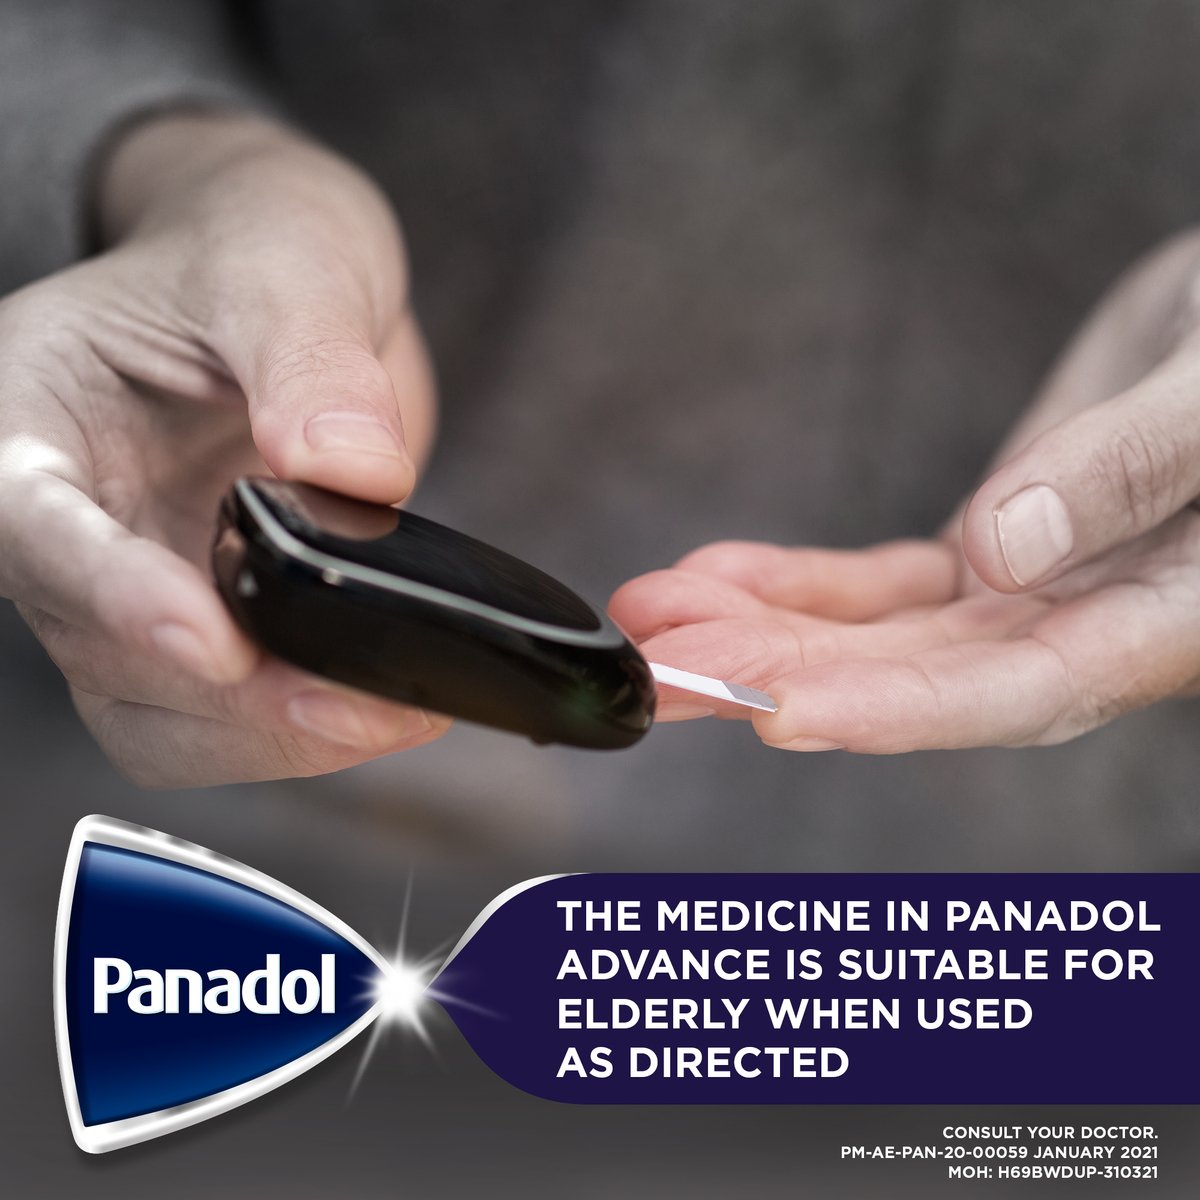 Panadol Advance 96 Tablets